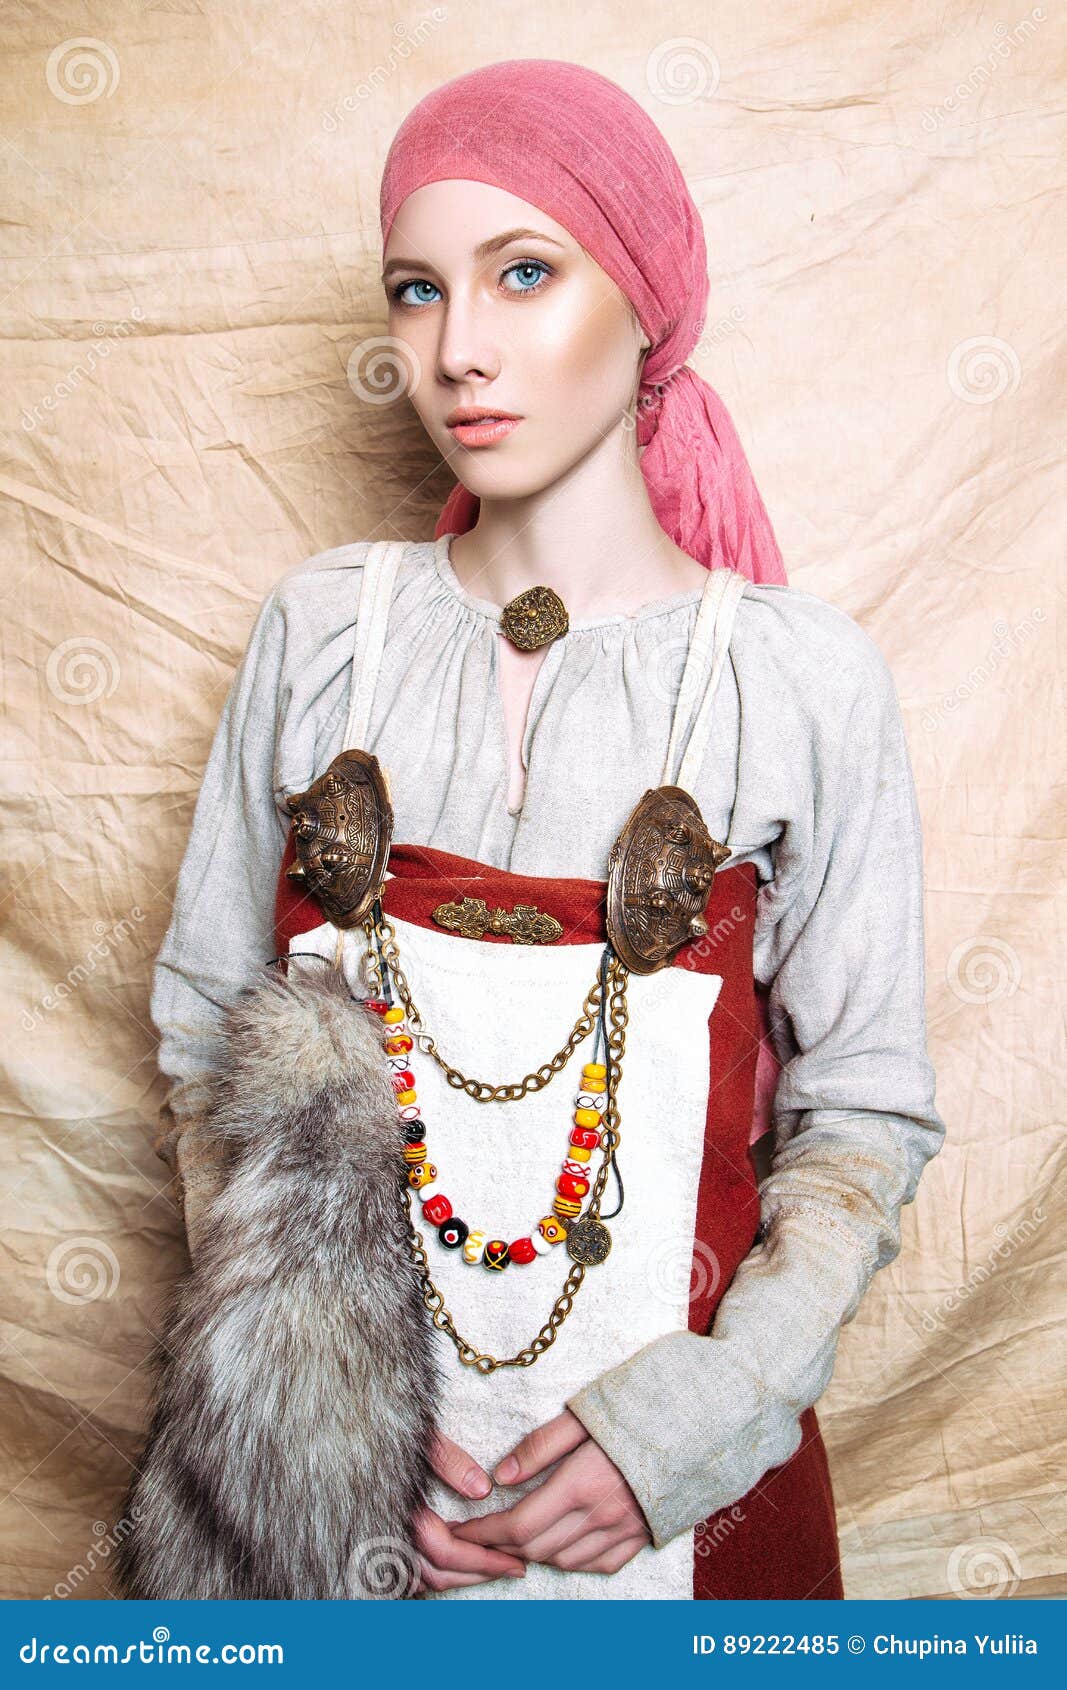 https://thumbs.dreamstime.com/z/portrait-slavic-women-past-national-vintage-clothing-woman-historical-reconstruction-studio-89222485.jpg